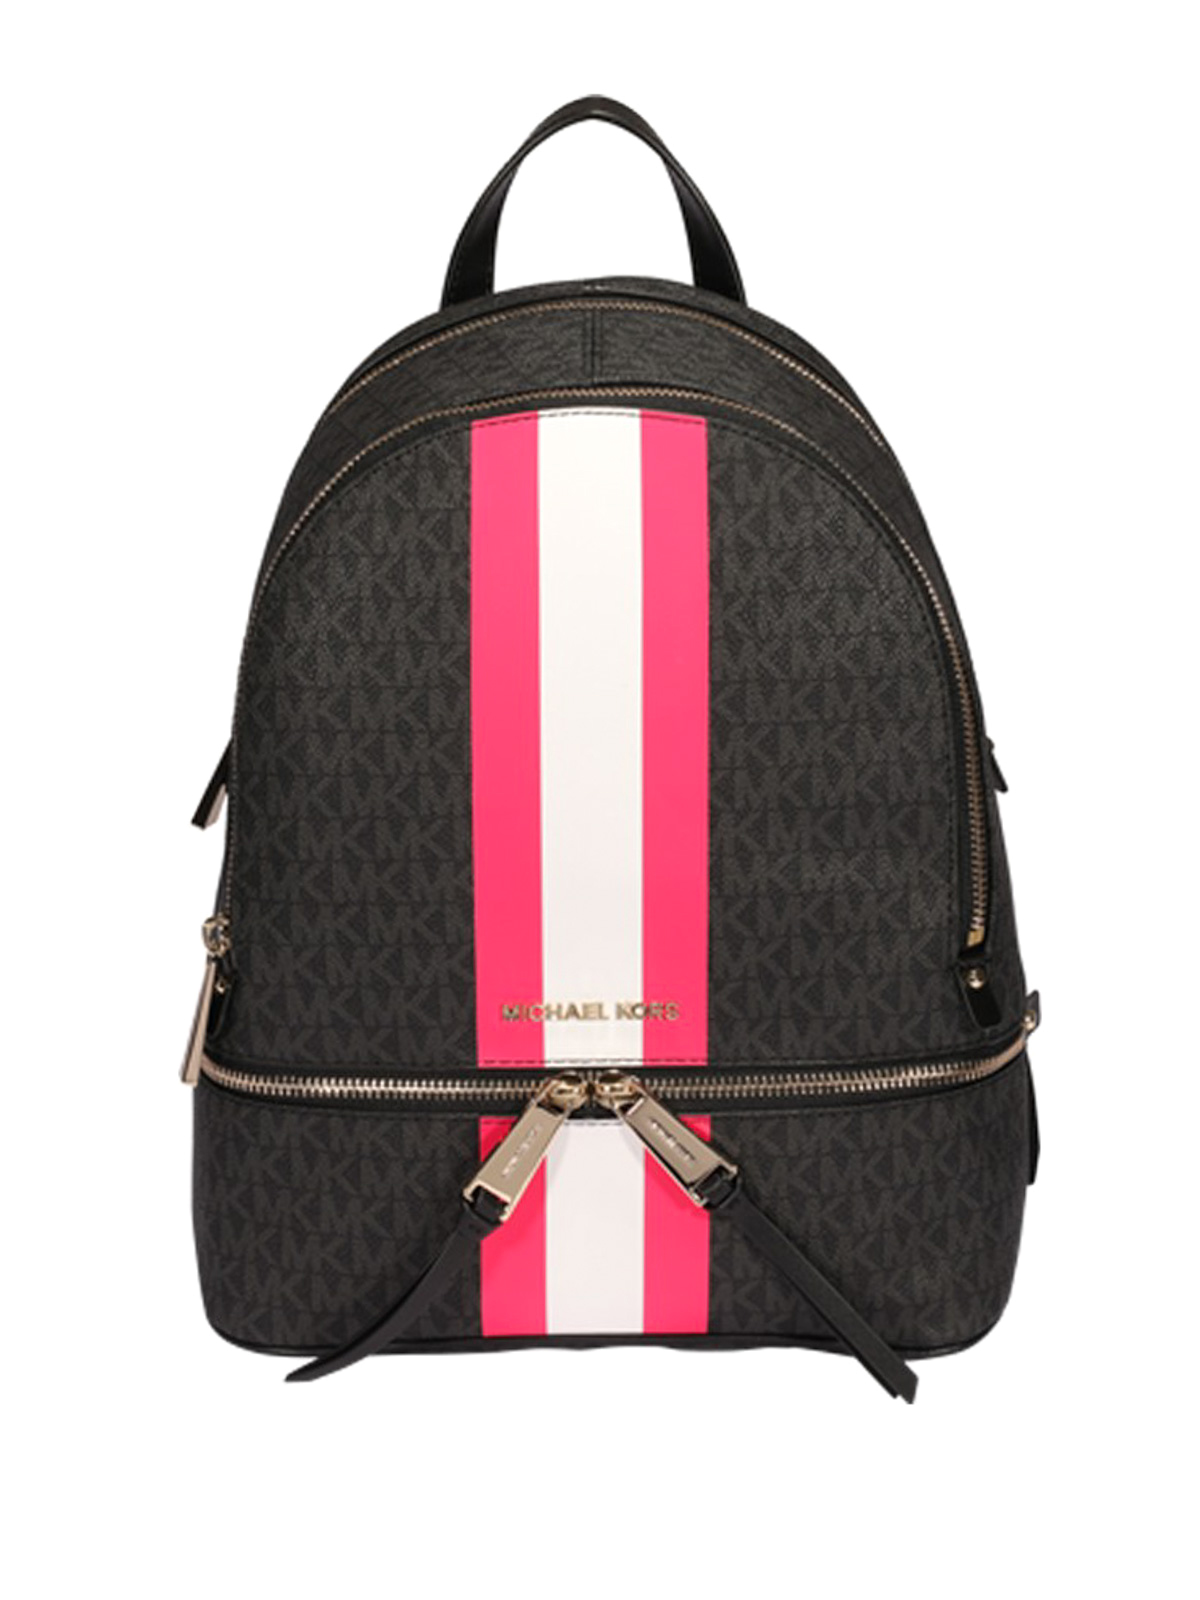 michael kors striped backpack